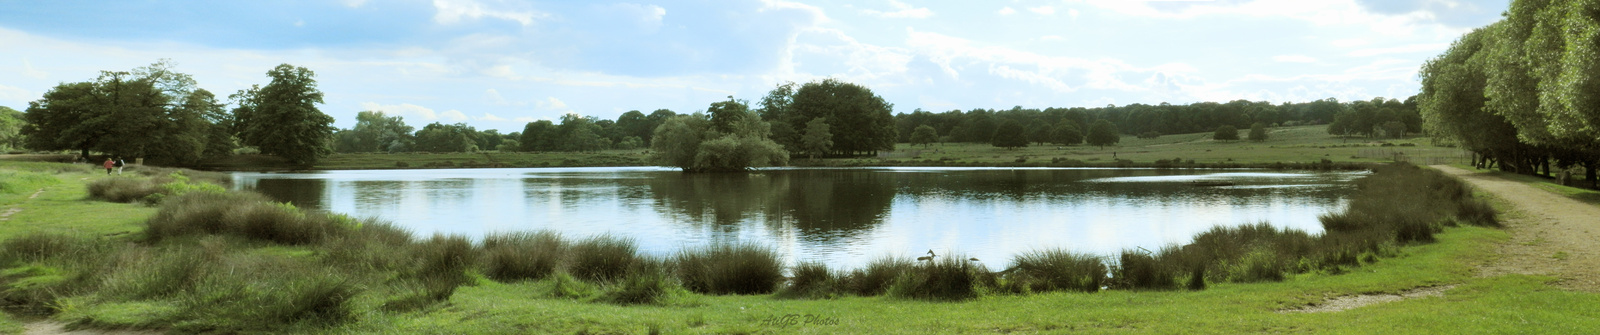 Richmond park tó-panoráma